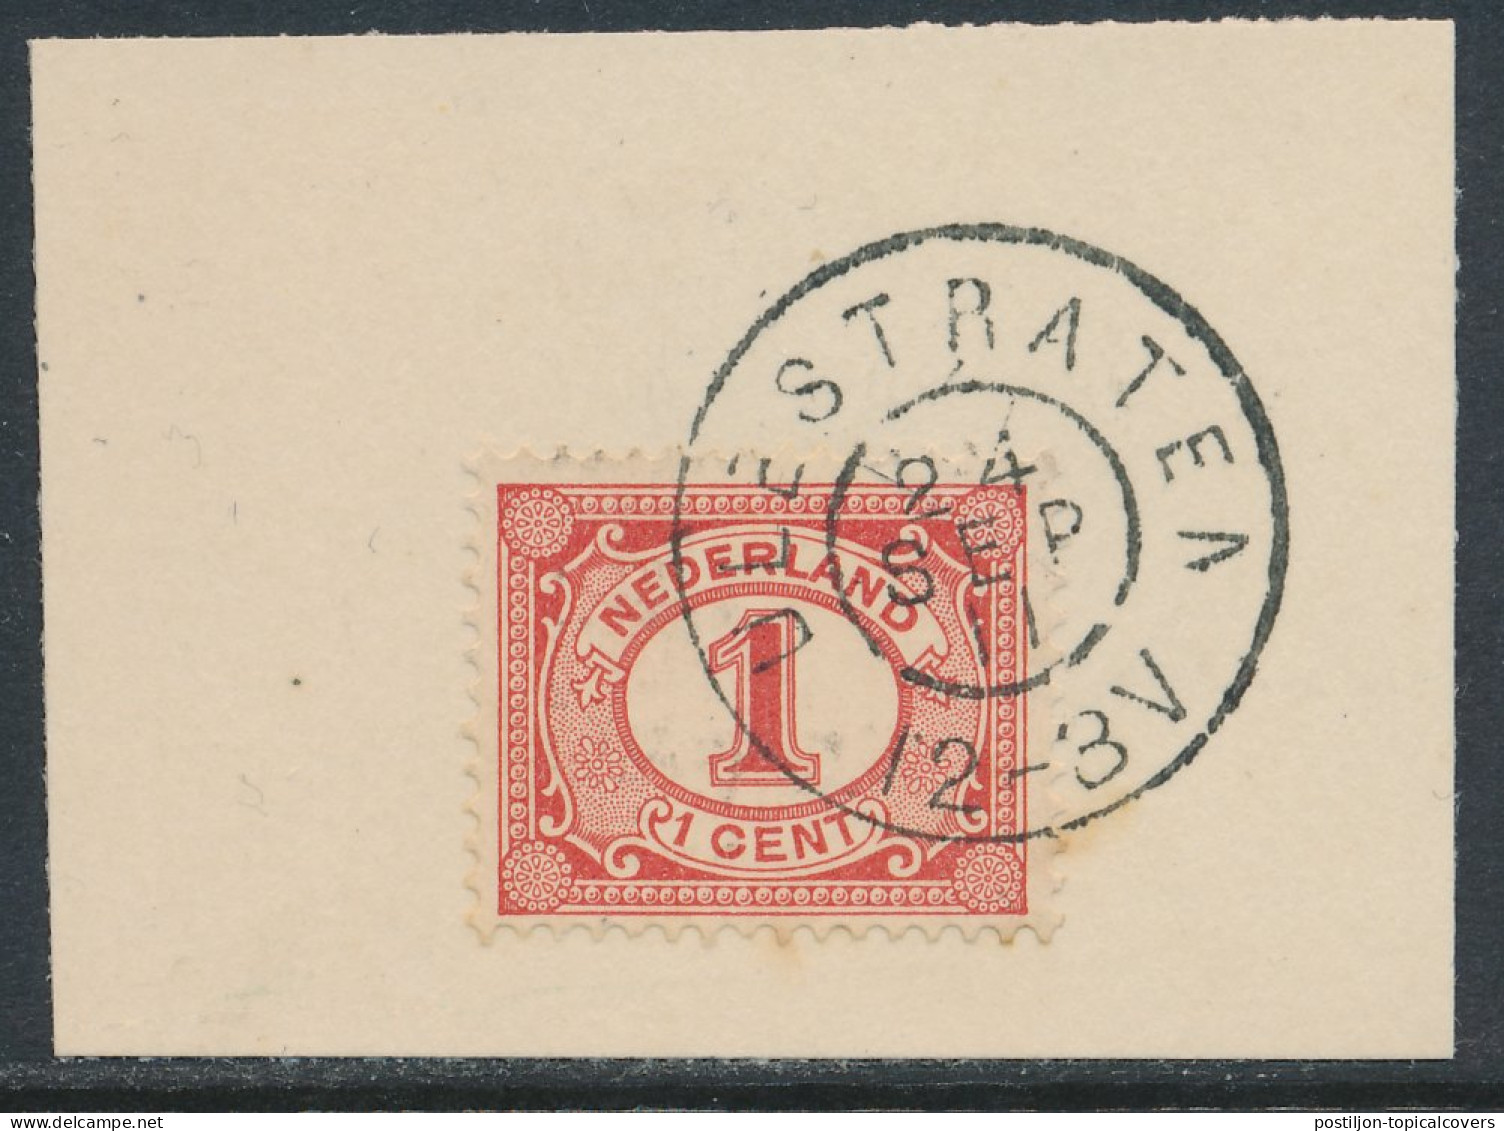 Grootrondstempel Ulestraten 1911 - Postal History